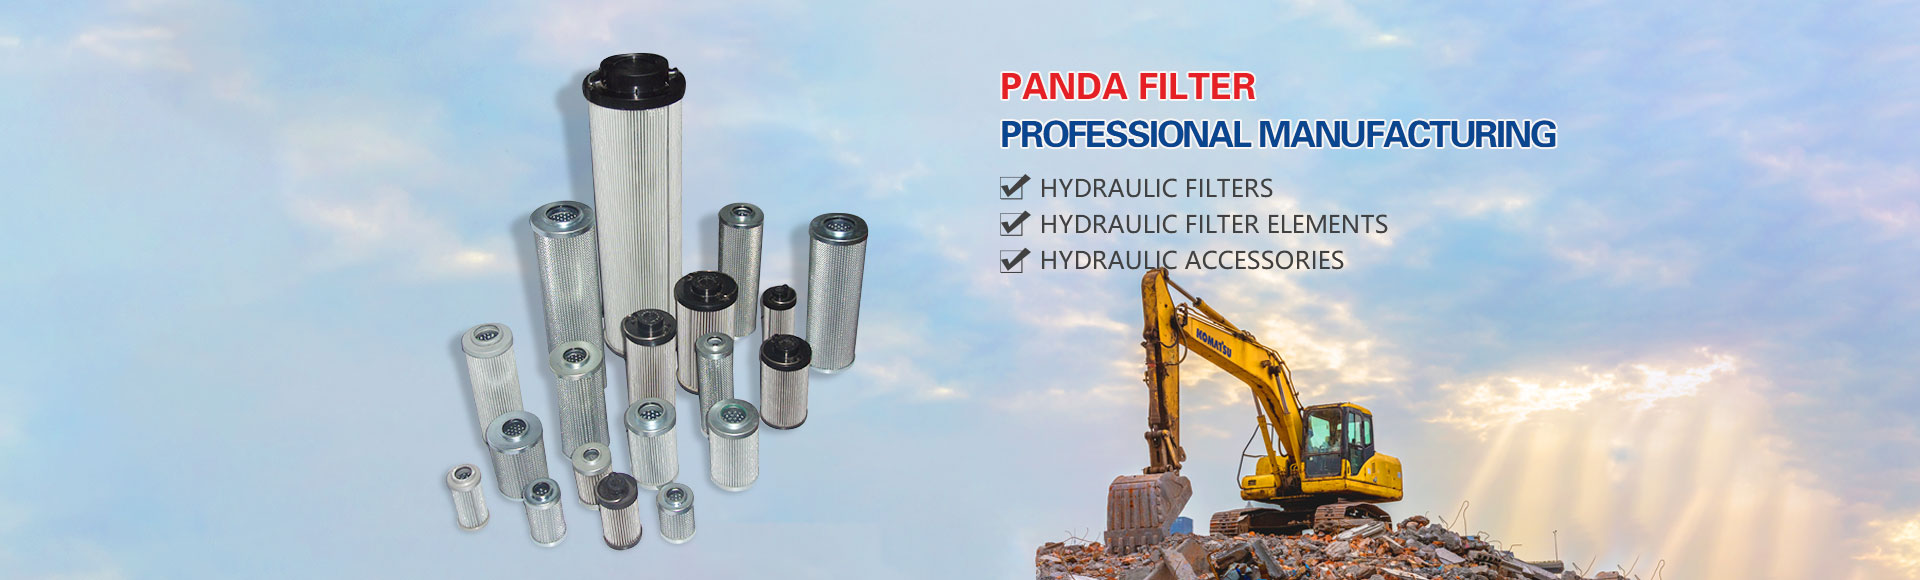 Xinxiang Panda Filter Ltd.,Co.